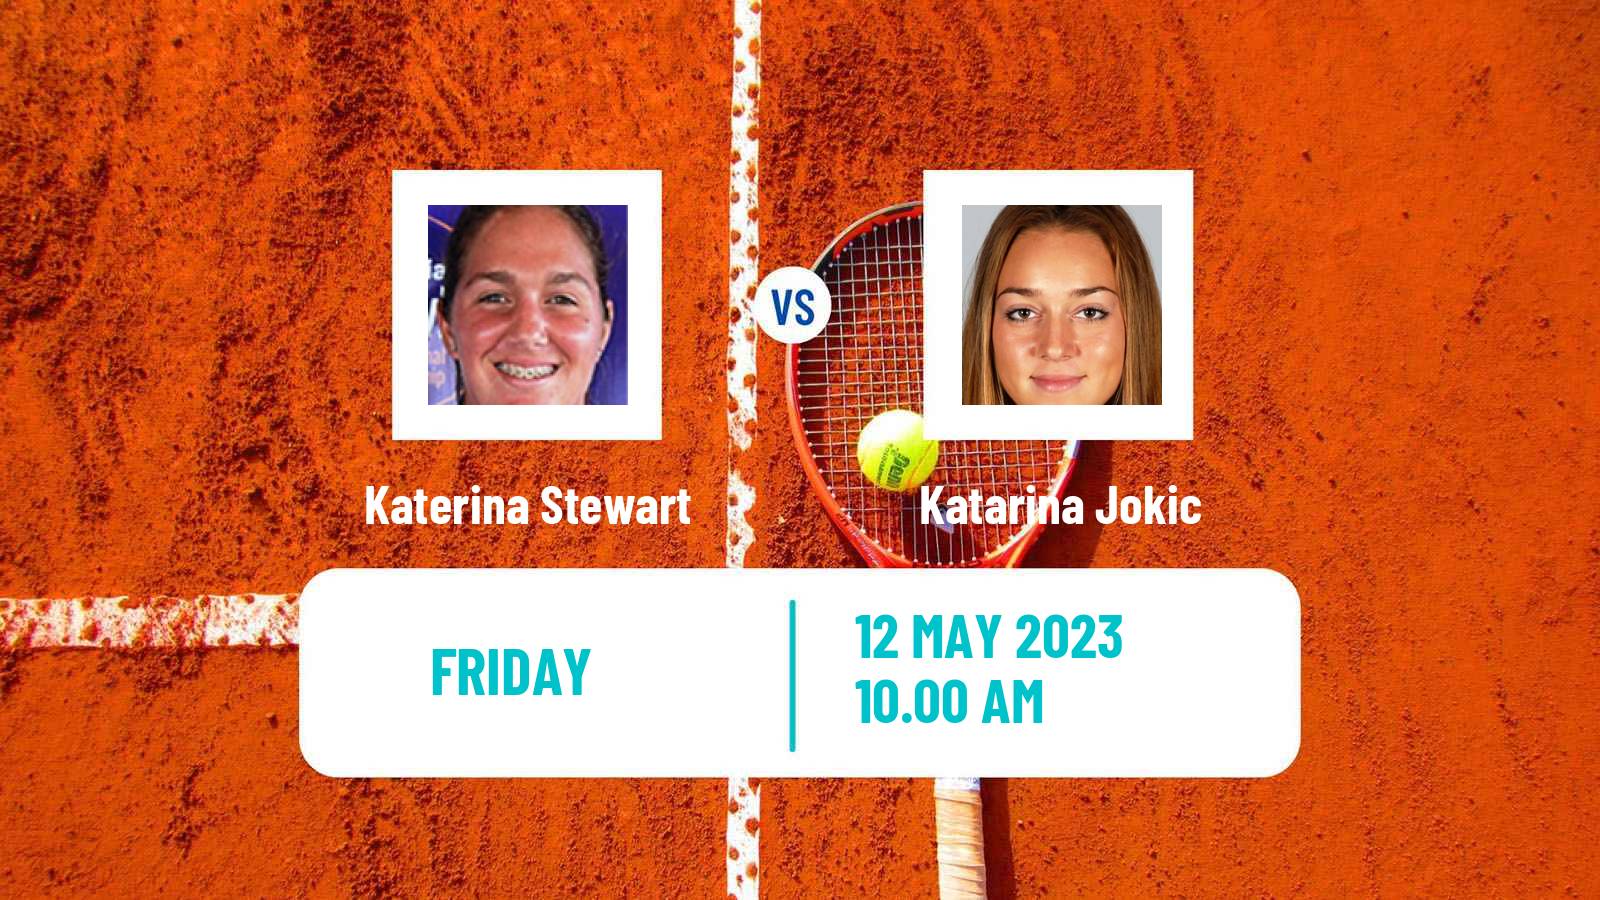 Tennis ITF Tournaments Katerina Stewart - Katarina Jokic